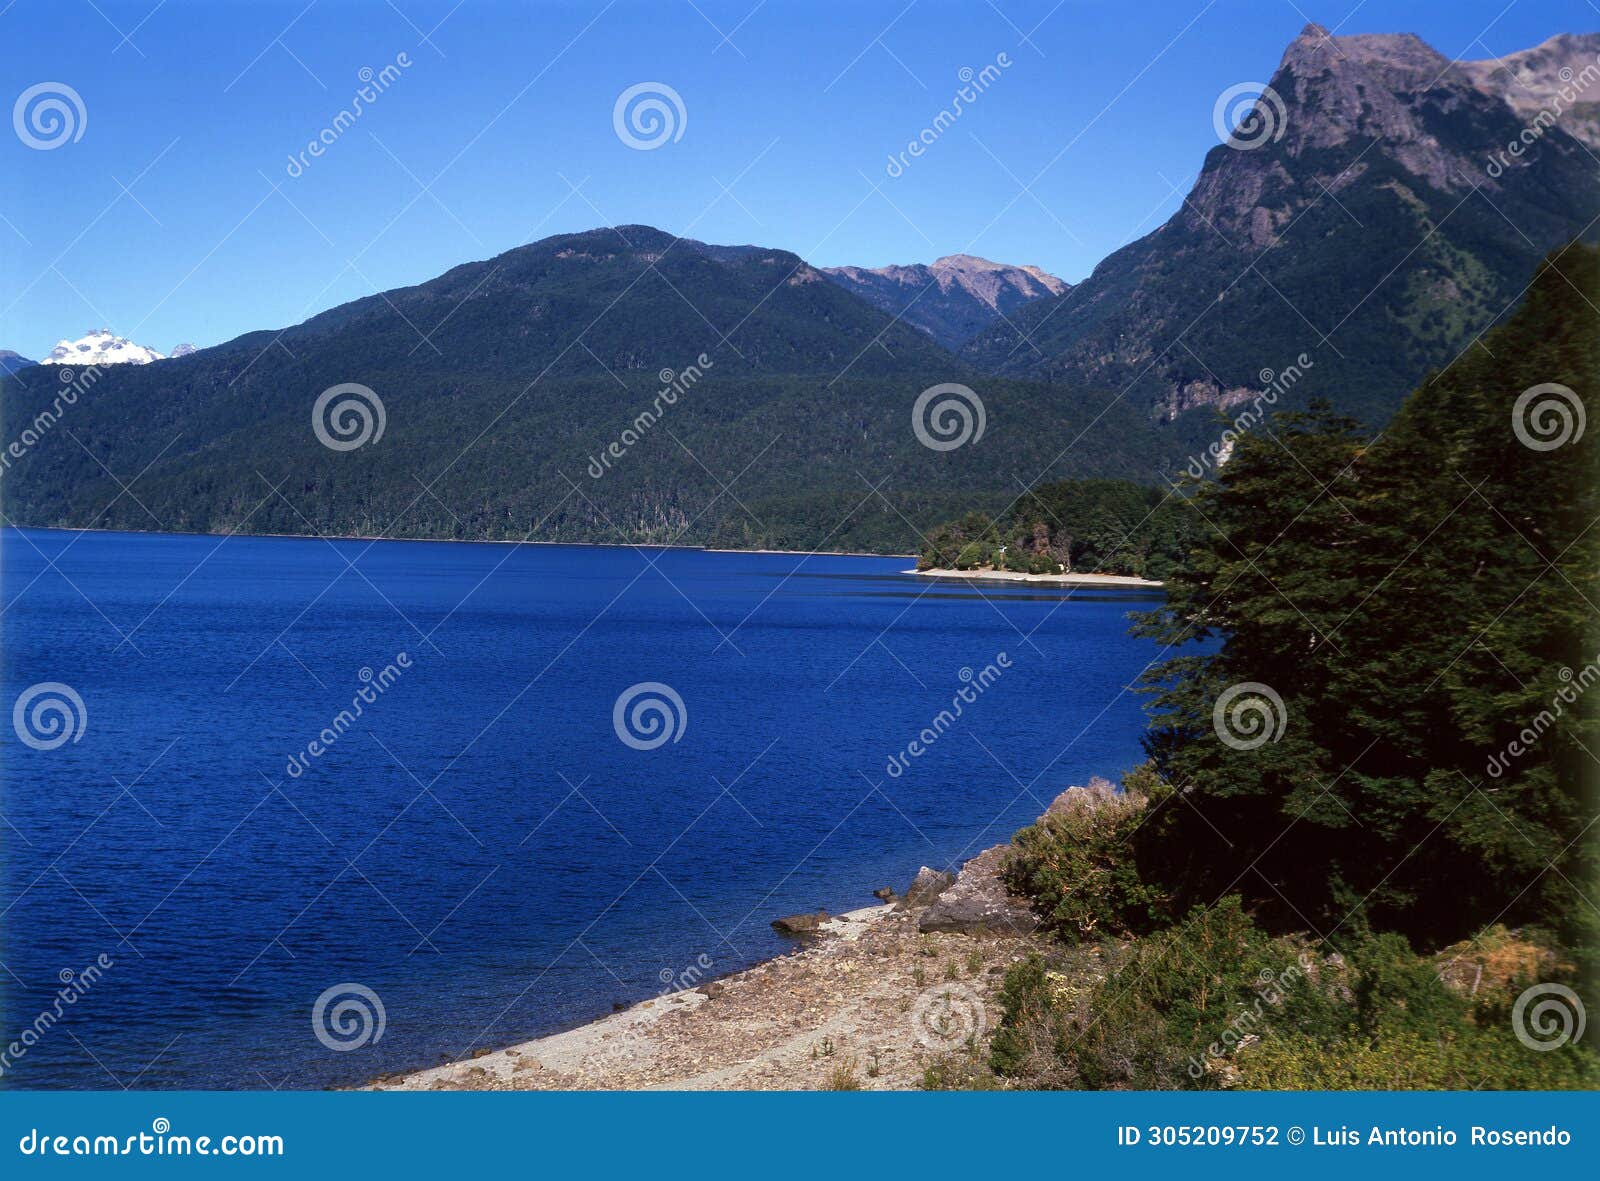 beautiful viux of nahuel huapi lake, bariloche (argentina